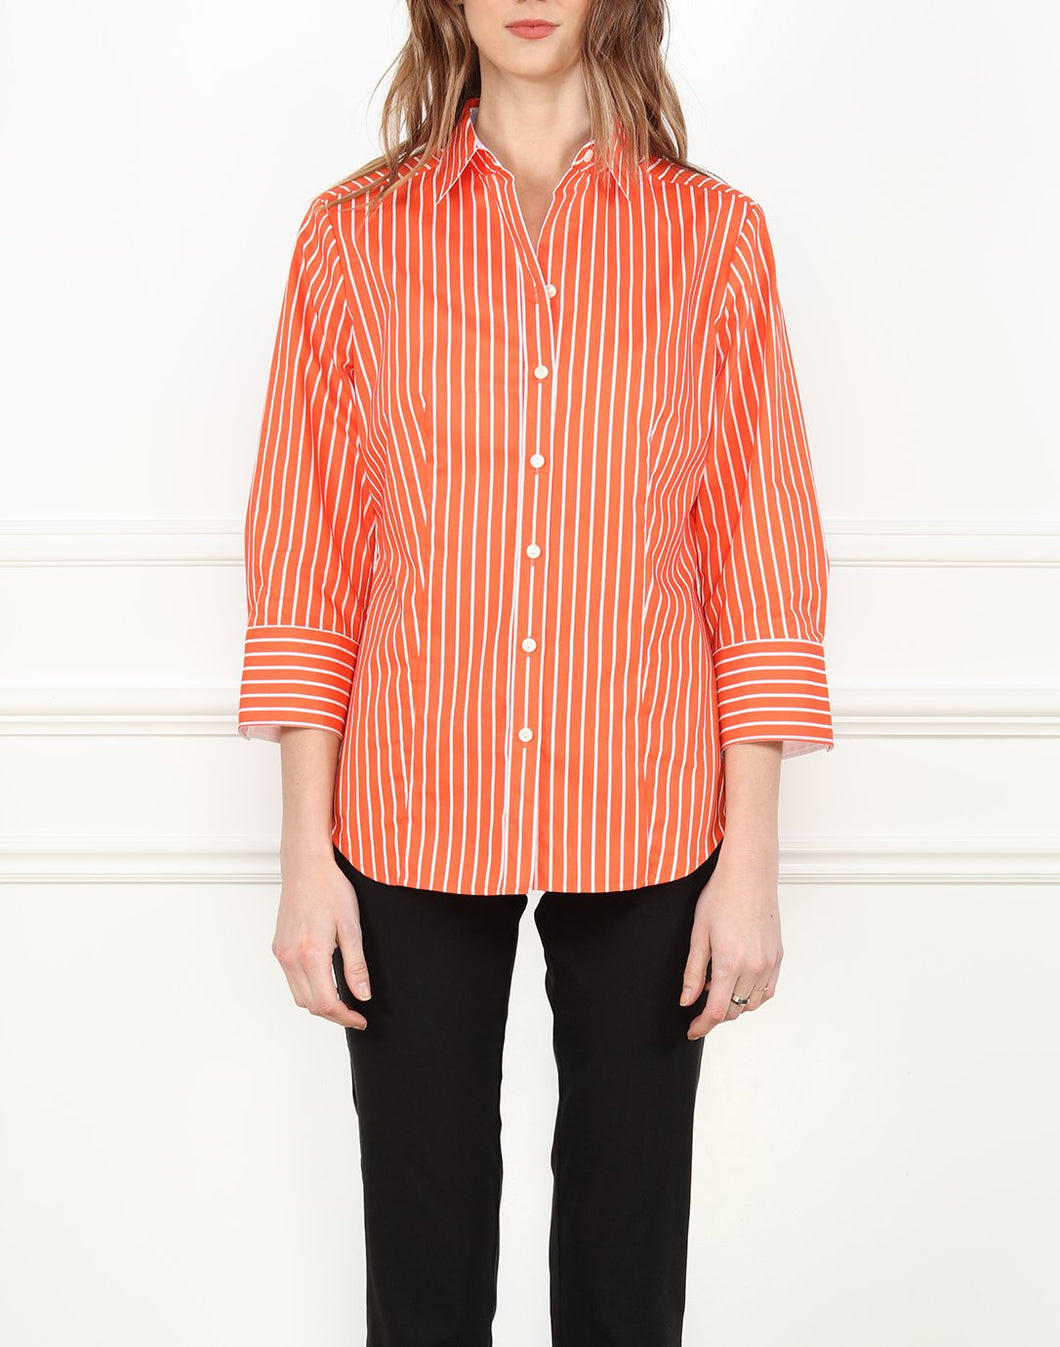 Diane Classic Fit Shirt In Orange/White Stripe